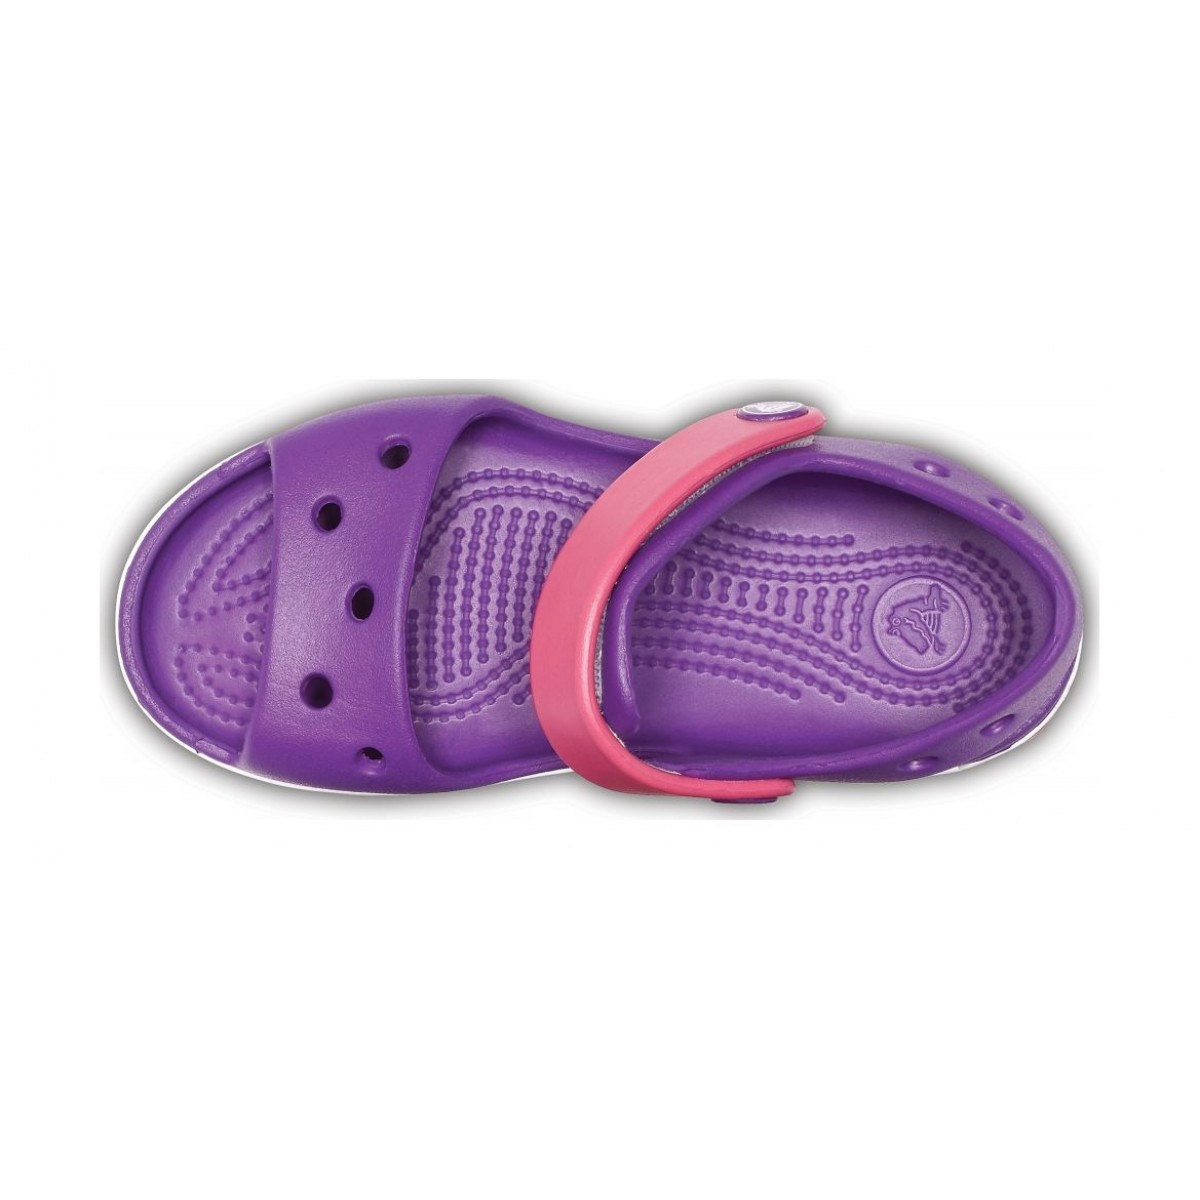 Crocs™ Kids' Crocband Sandal